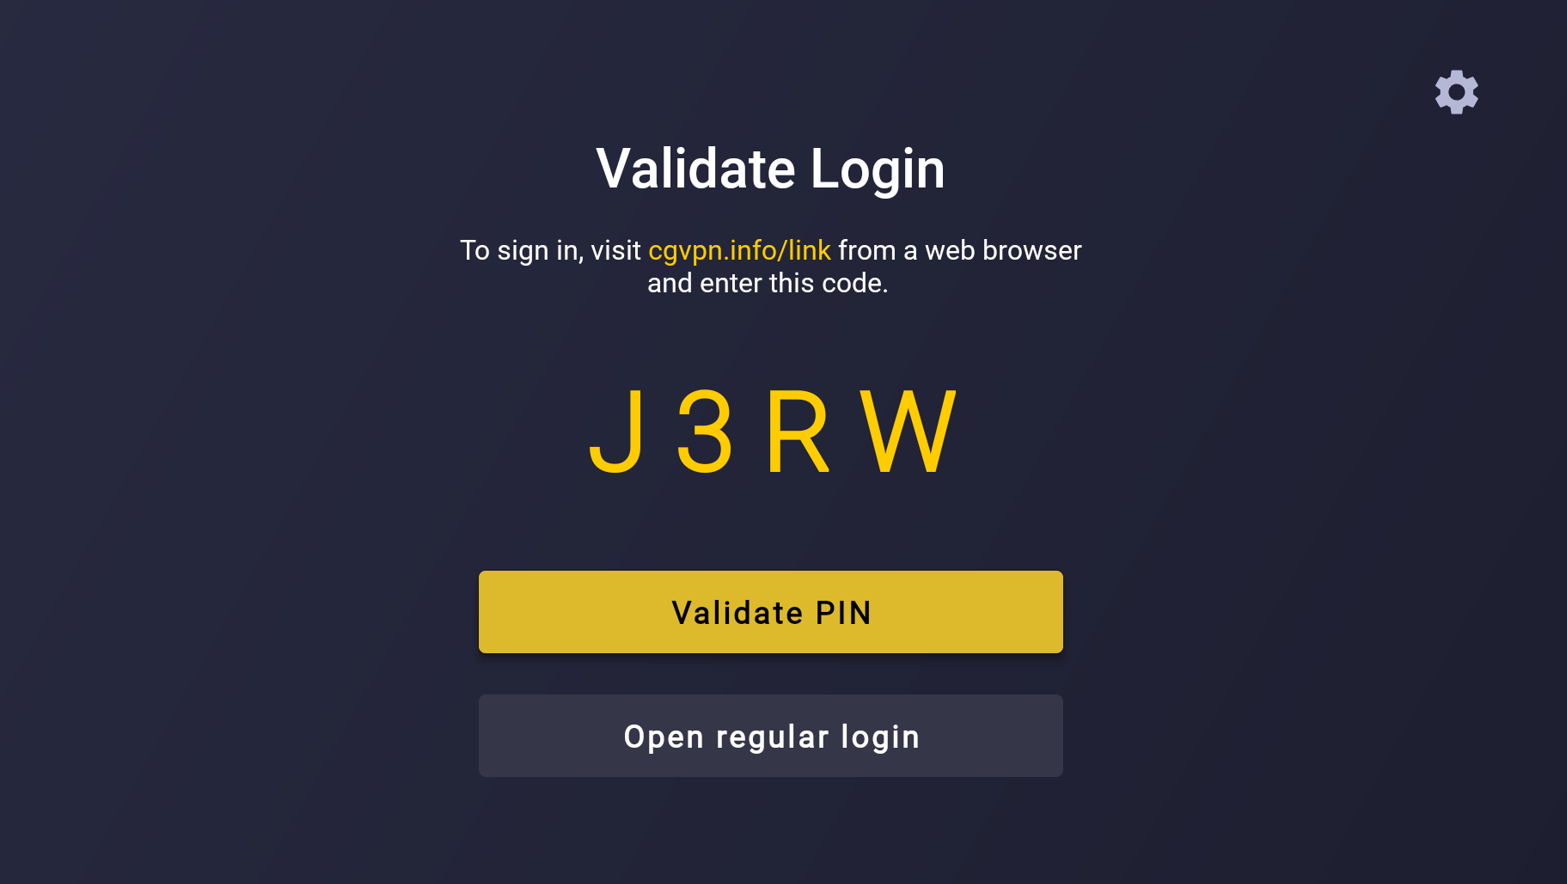 Screenshot of PIN page for login validation